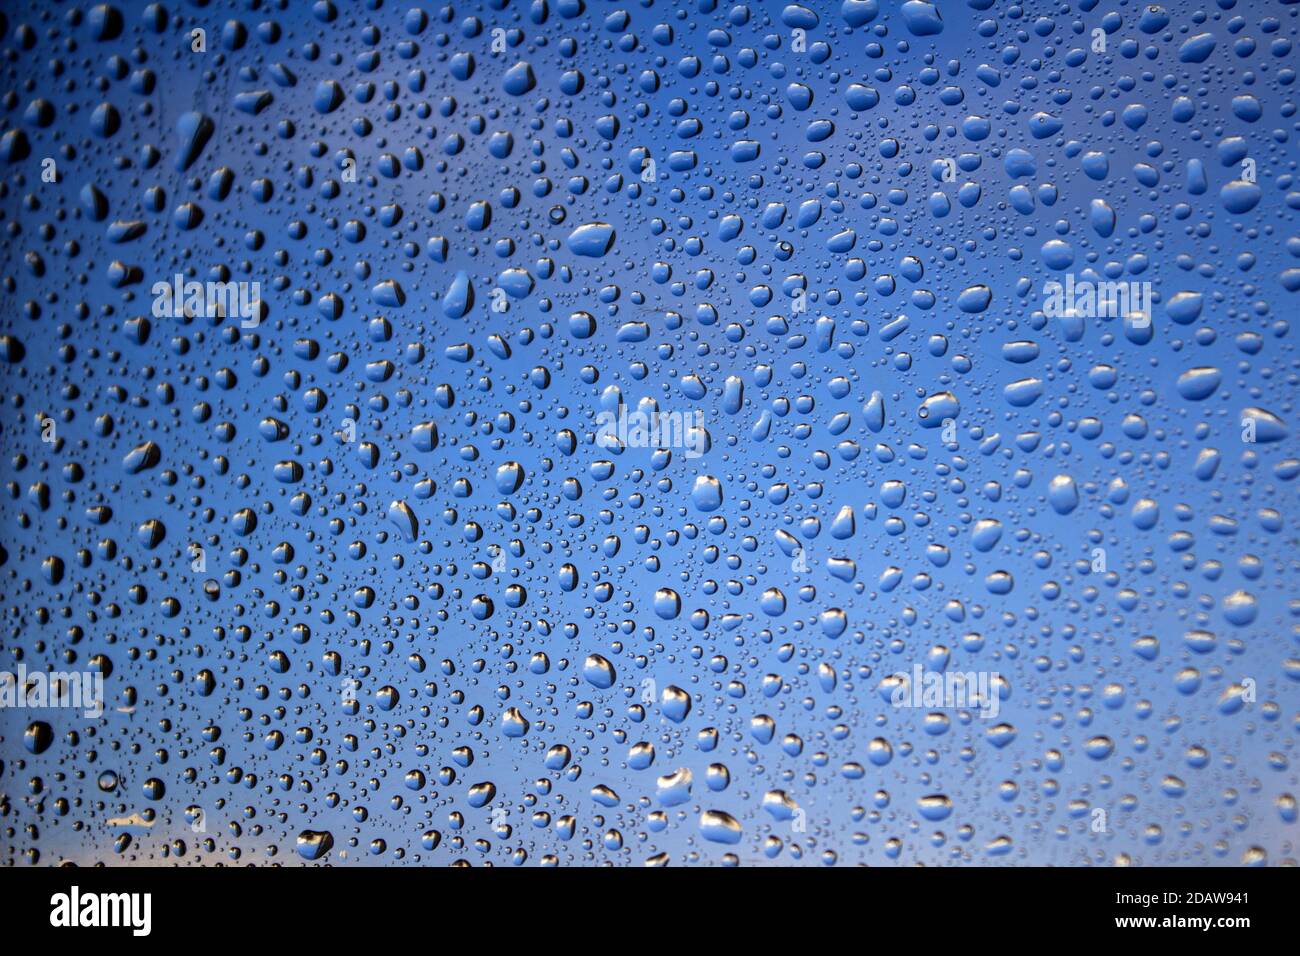 https://c8.alamy.com/comp/2DAW941/rain-drops-on-a-window-natural-abstract-pattern-blue-sky-background-selective-focus-2DAW941.jpg